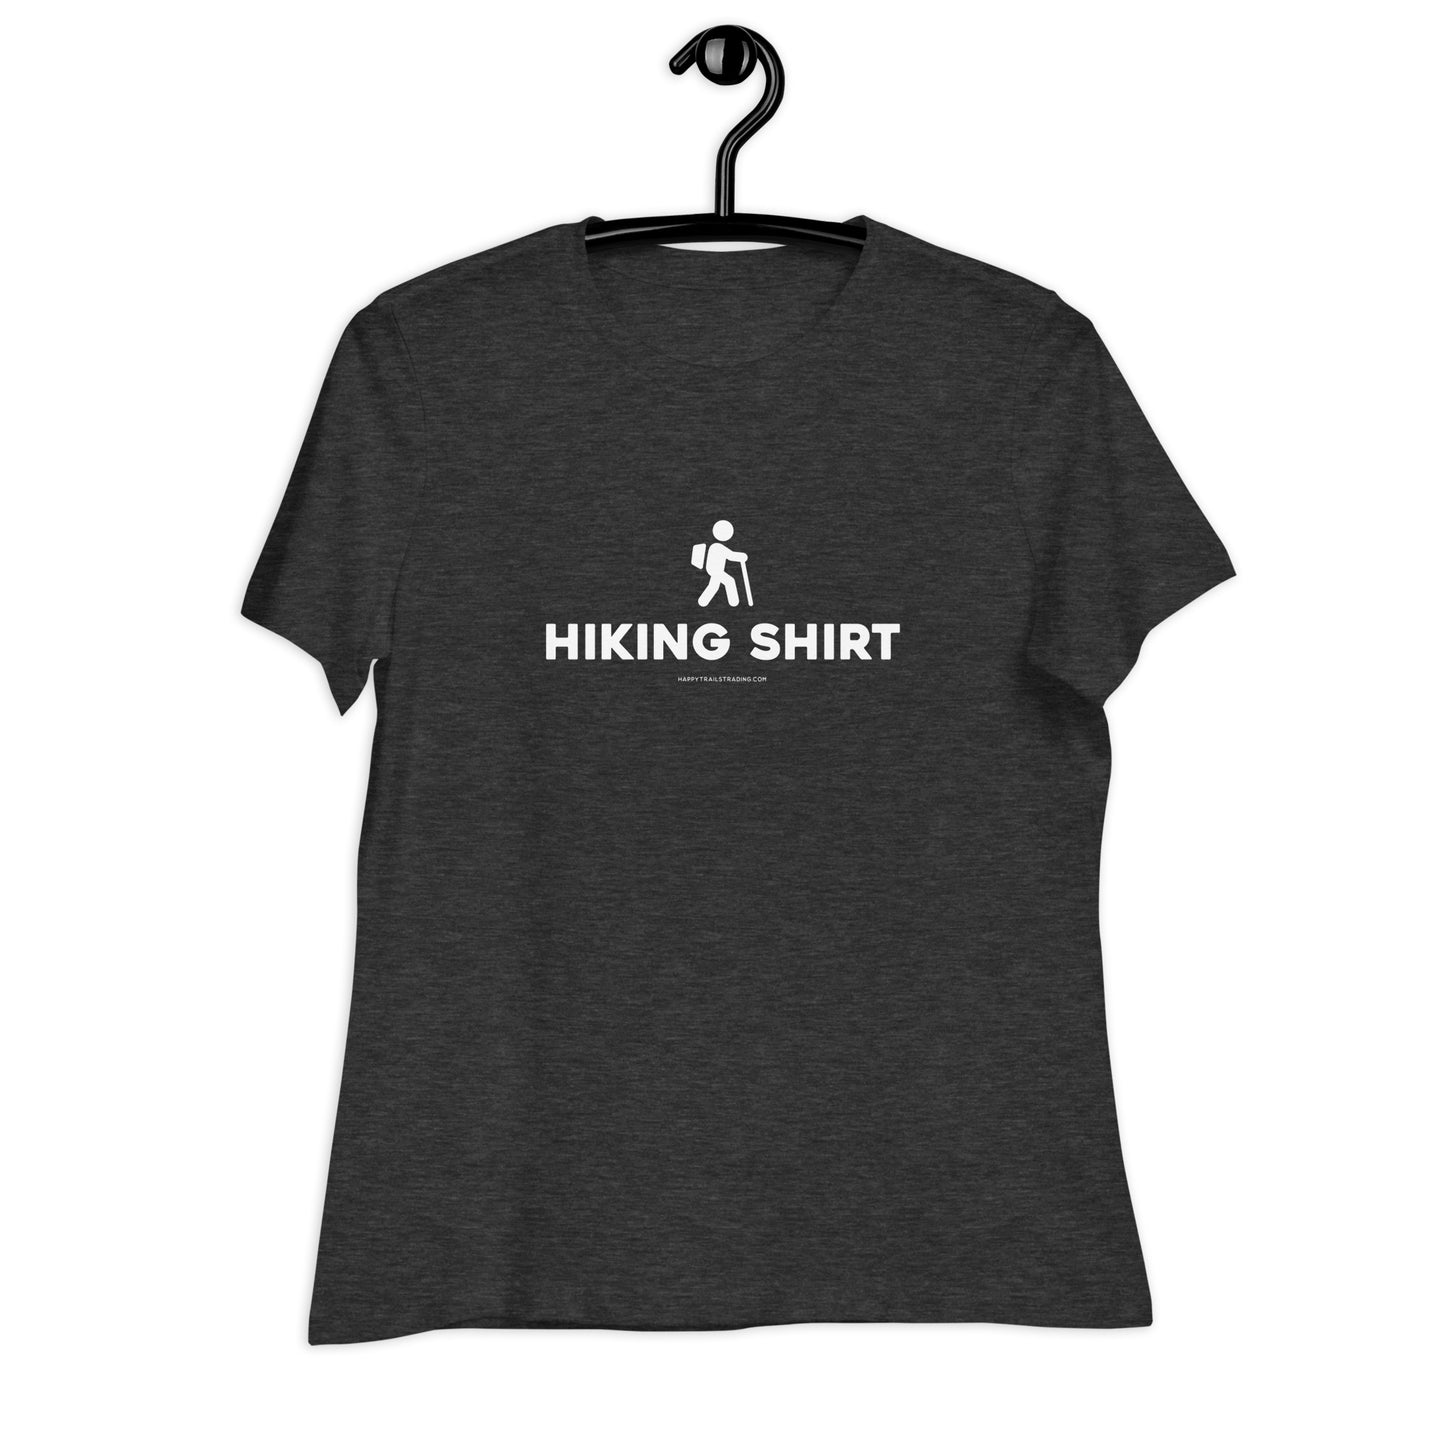 Happy Trails Hiking Shirt - Women's Relaxed T-Shirt